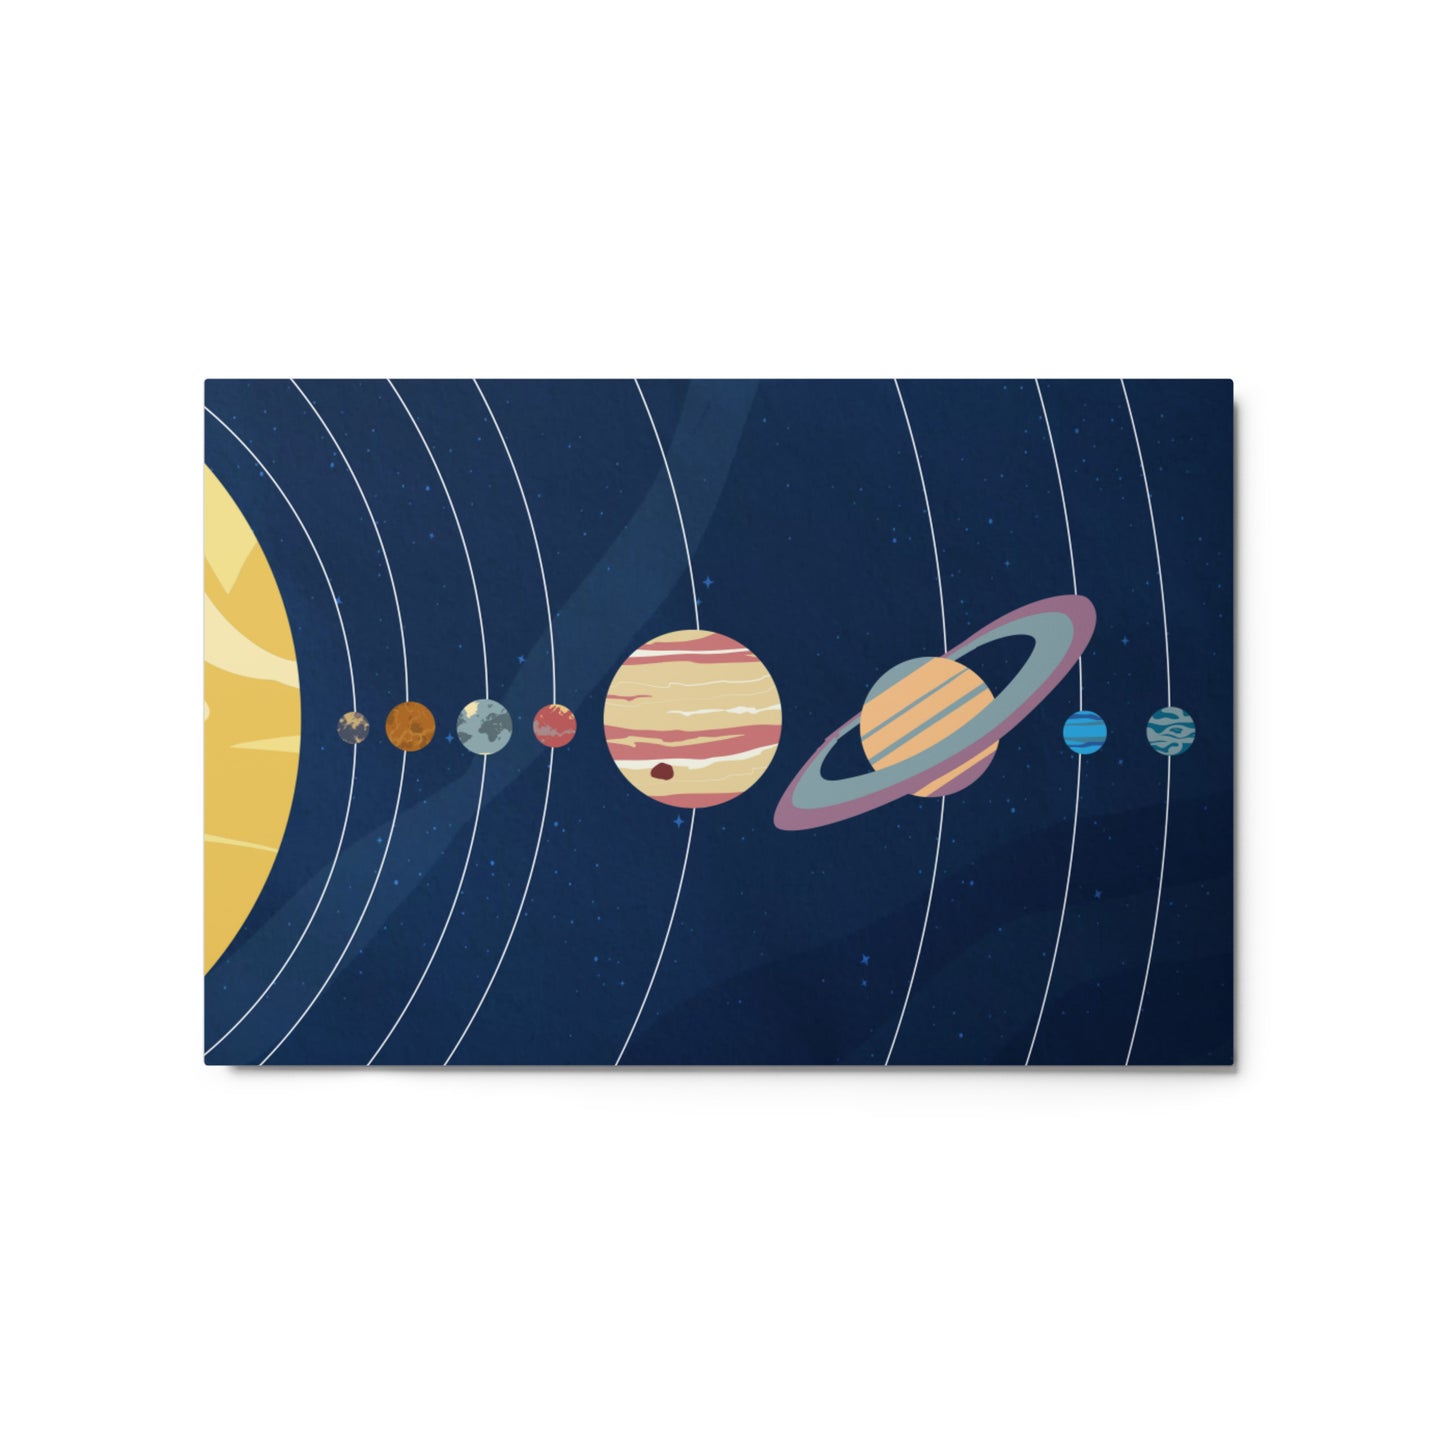 solar system artwork